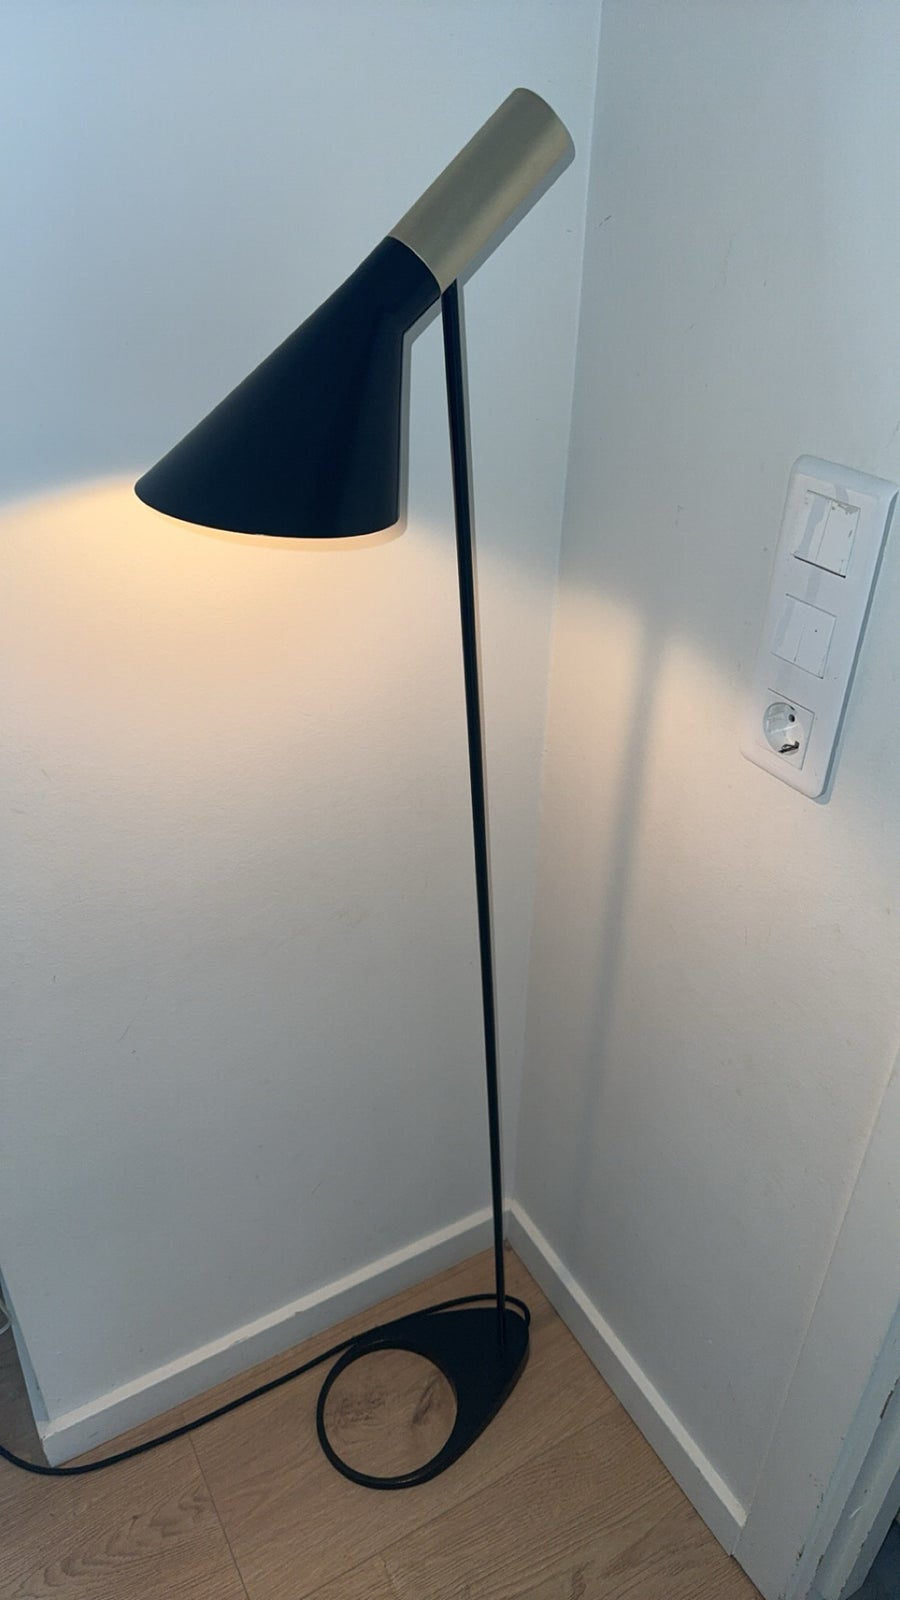 Arne Jacobsen, Aj gulvlampe næbbet, gulvlampe